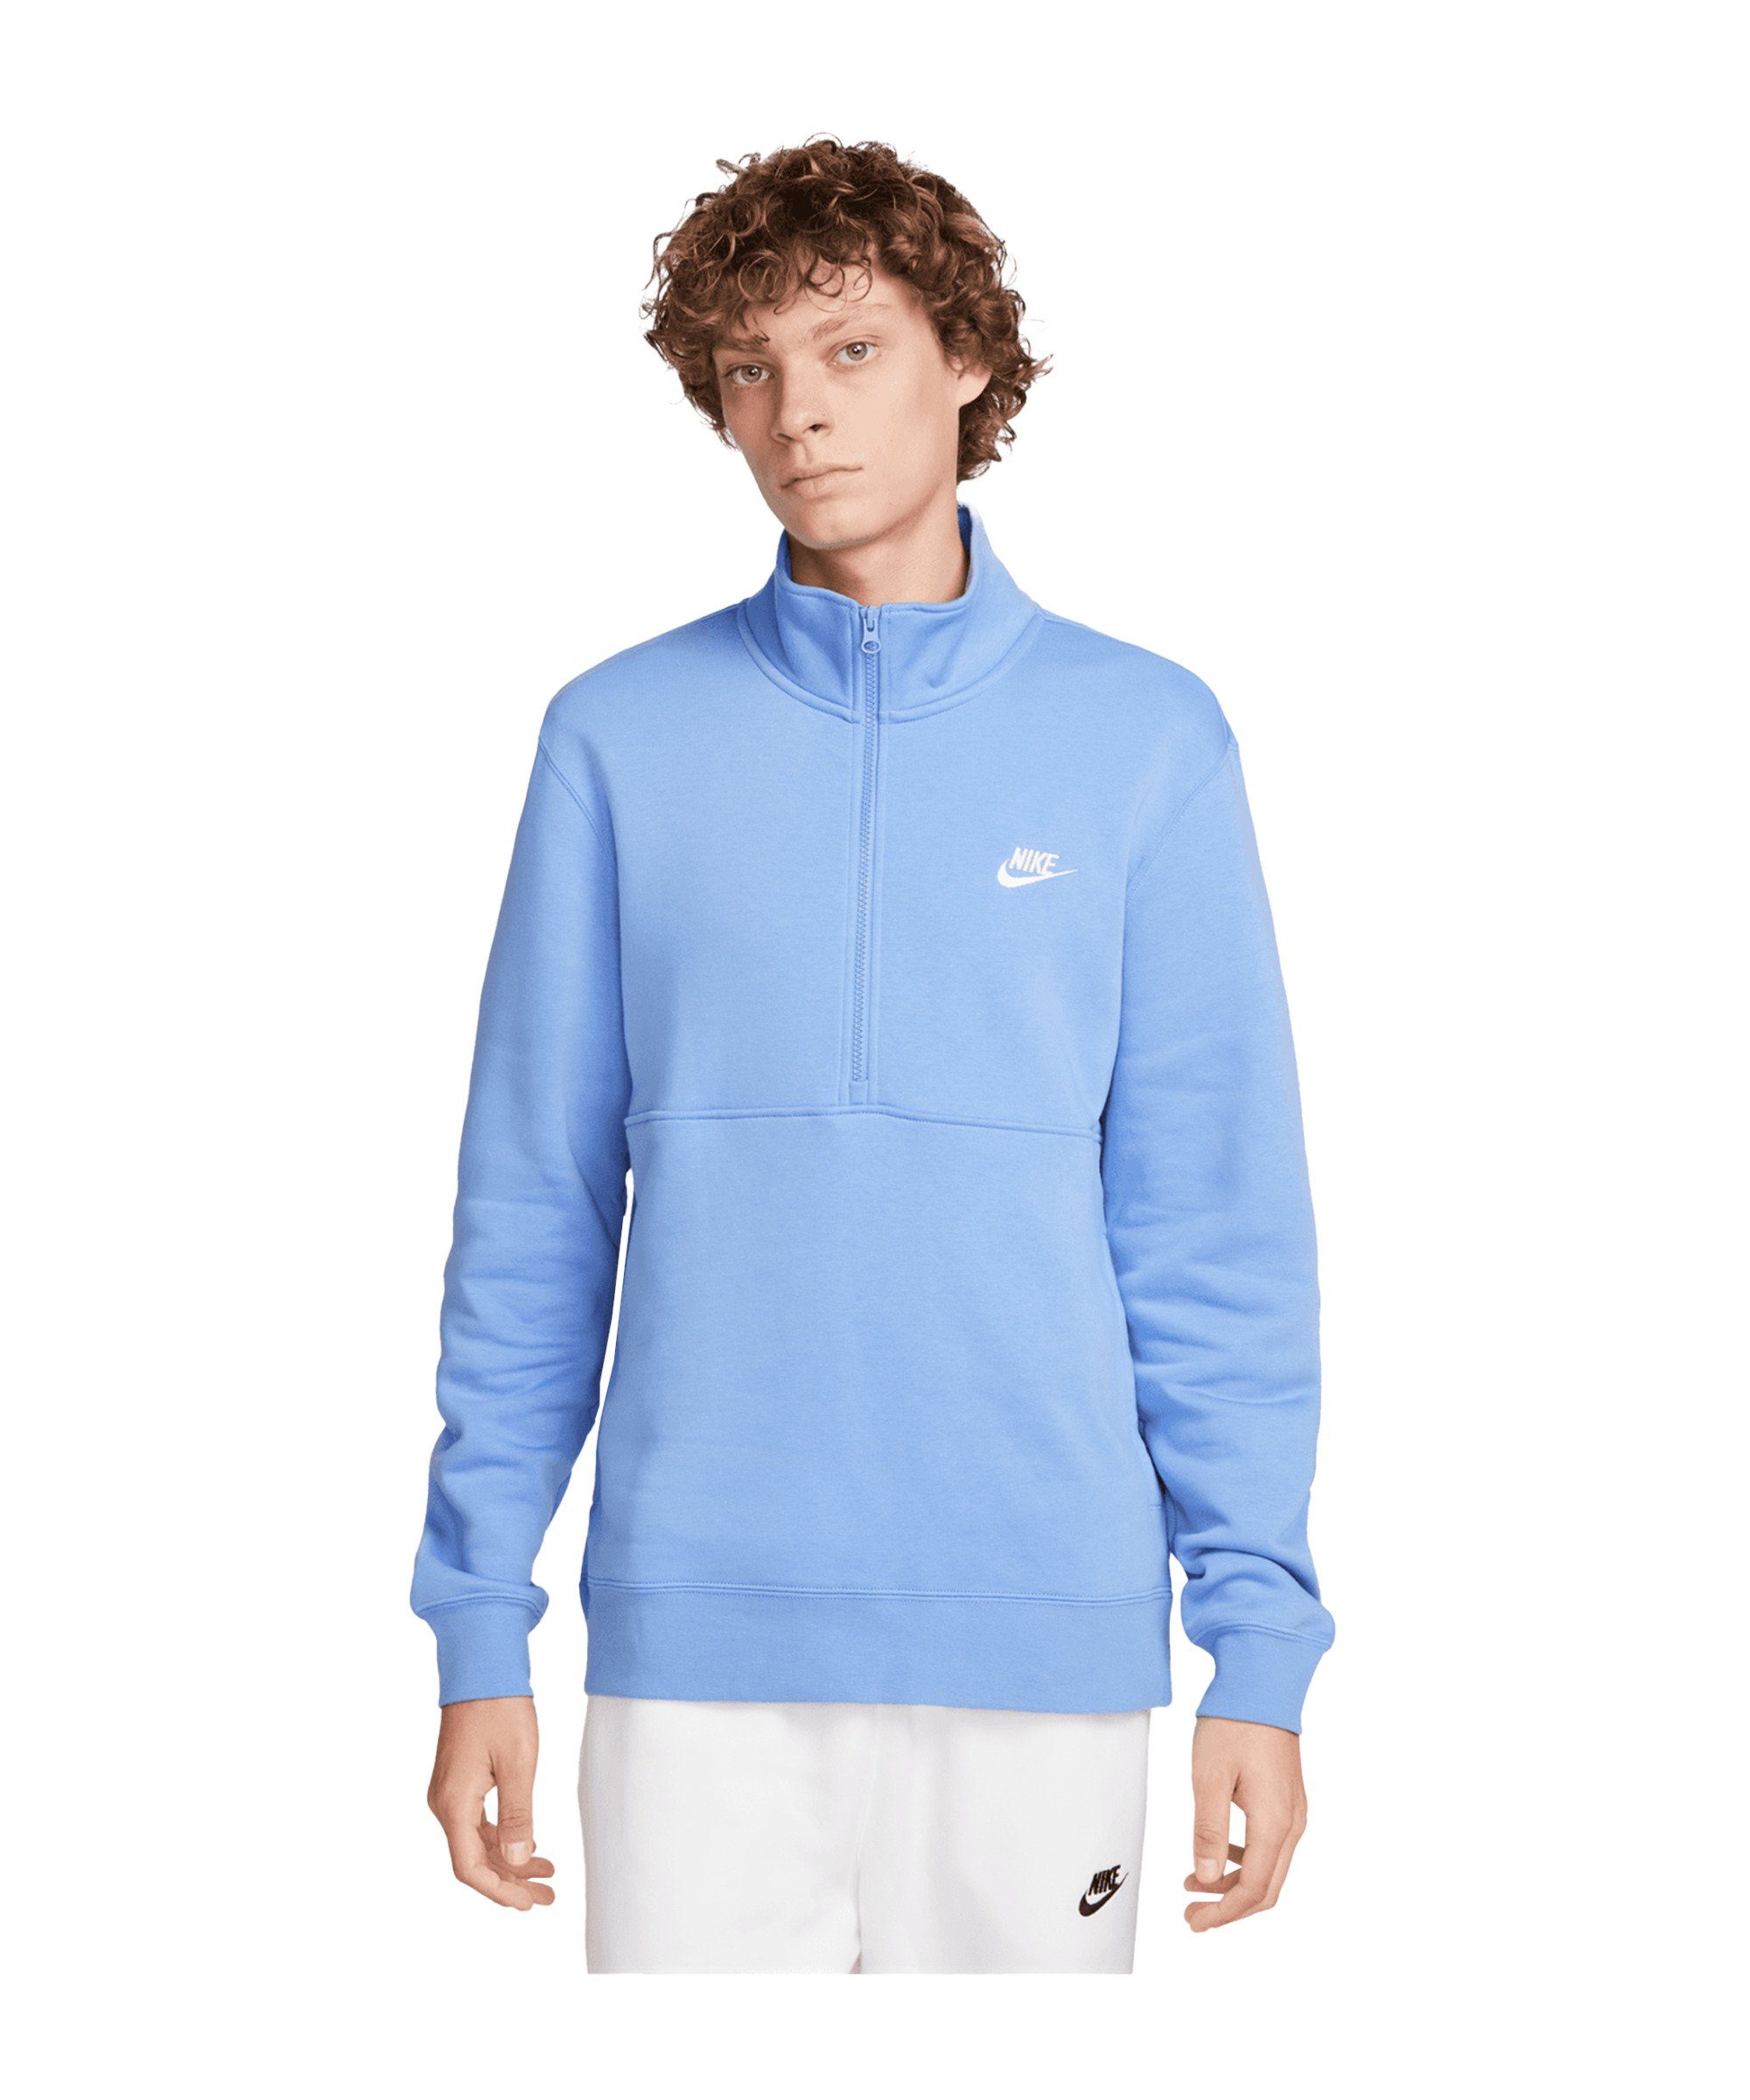 Sweatshirt Club HalfZip blaublauweiss Sweatshirt Nike Sportswear